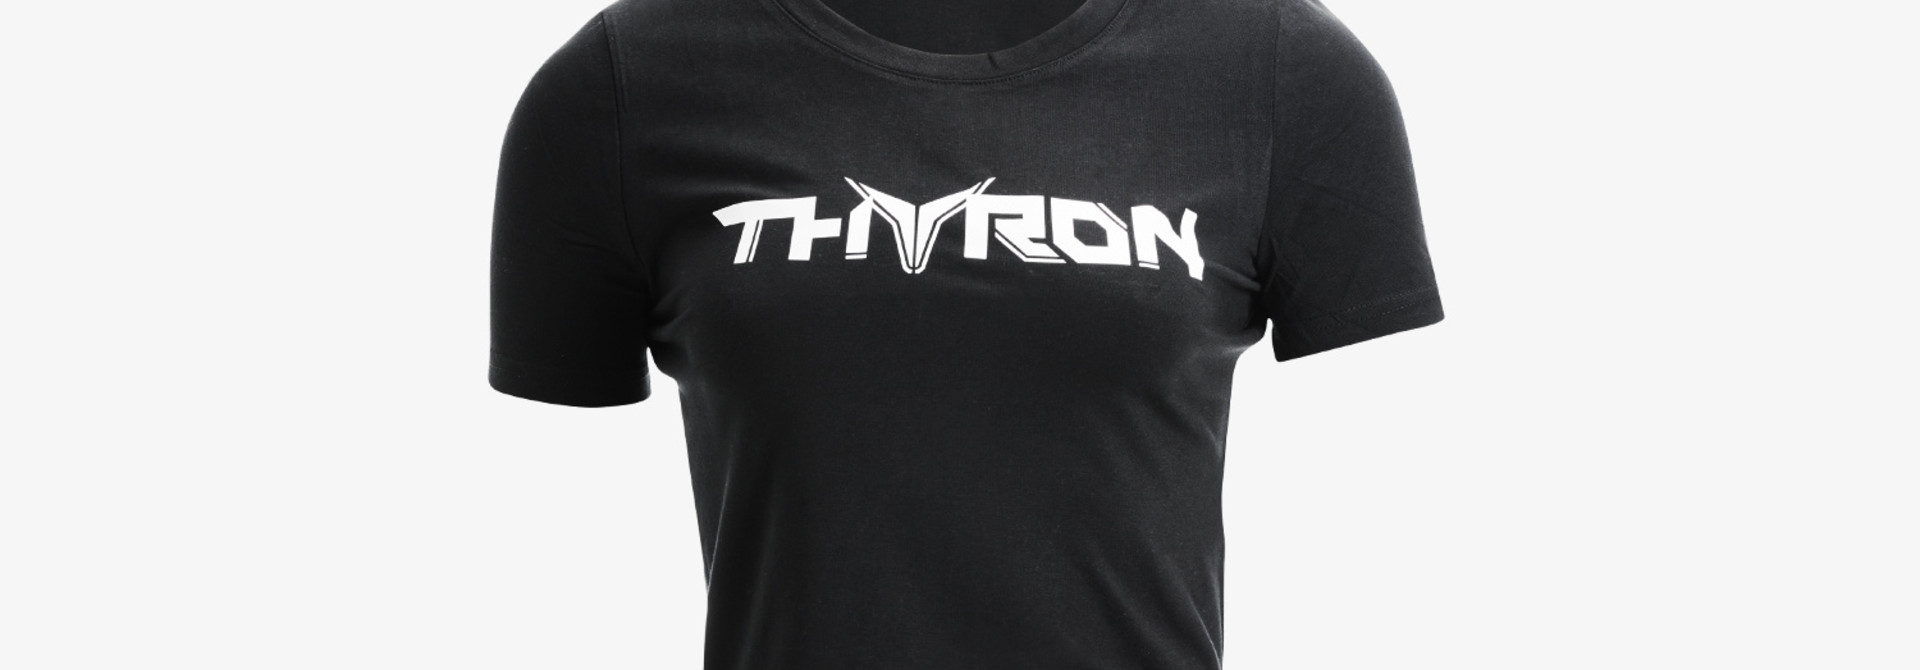 Thyron - Crop Top - Black